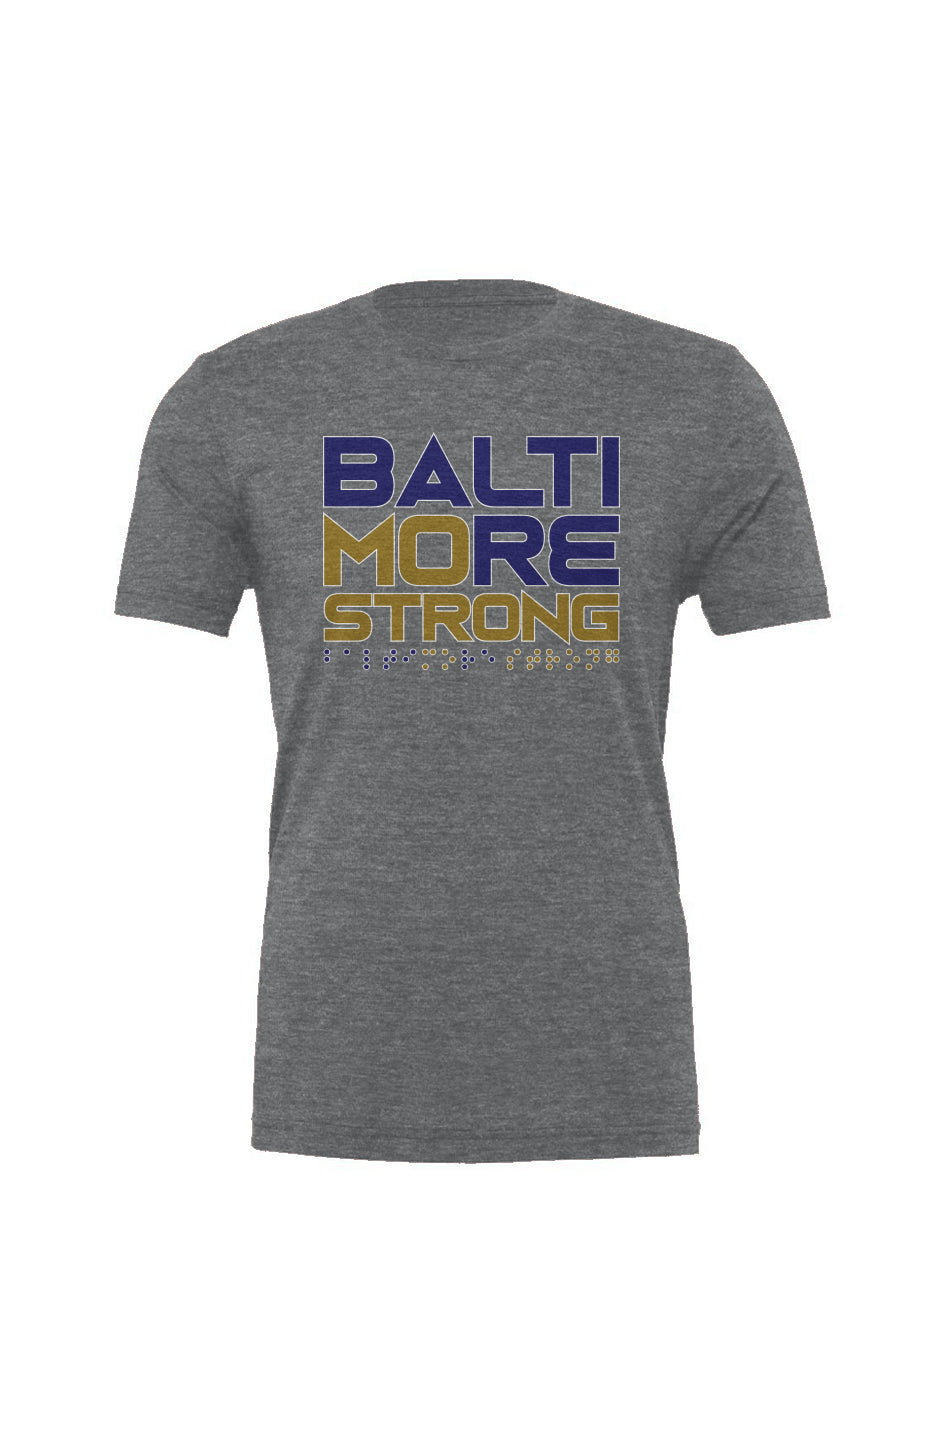 Baltimore is Mo Strong Tee (Gray)